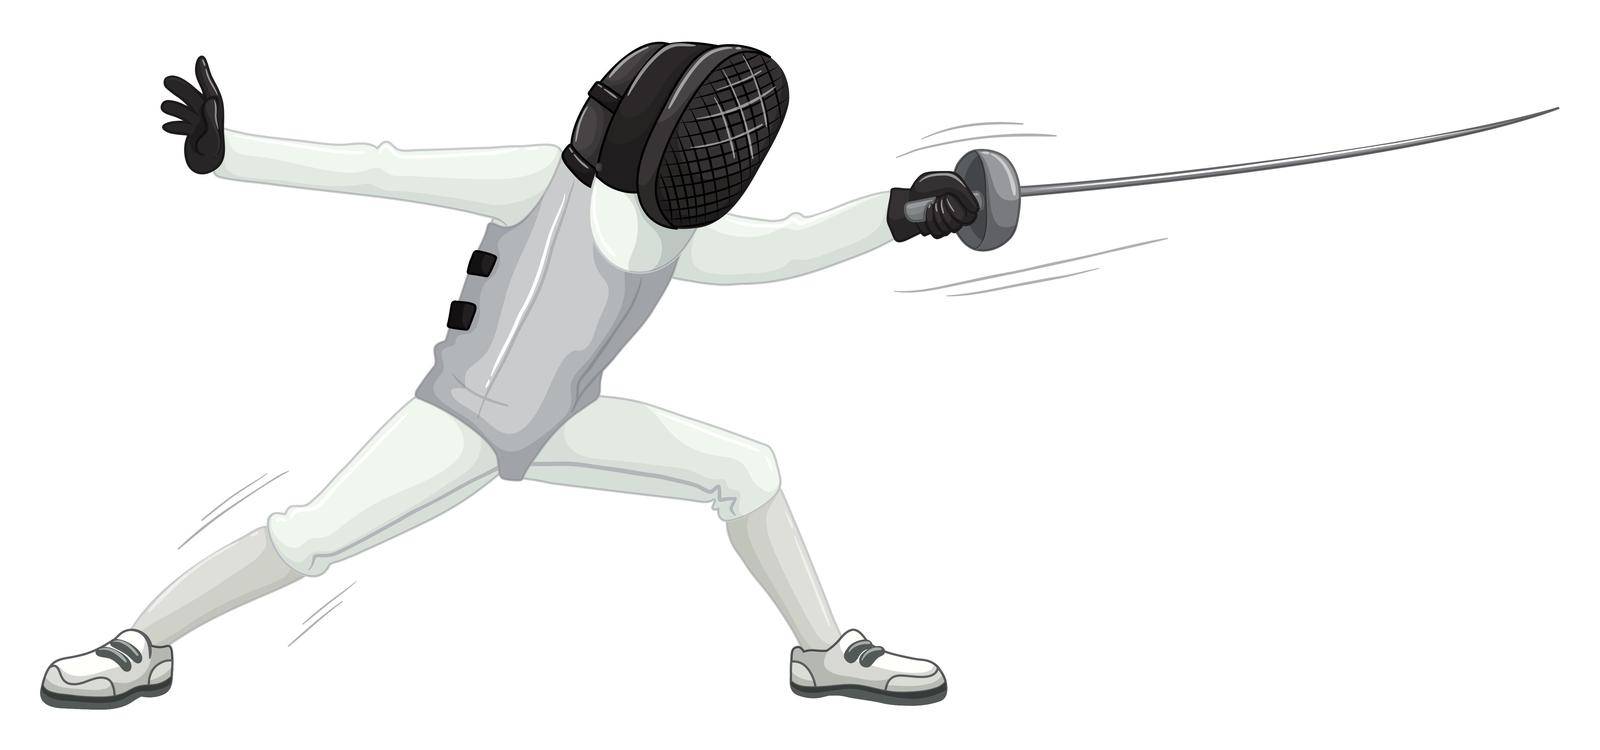 Athlete in uniform doing fencing illustration